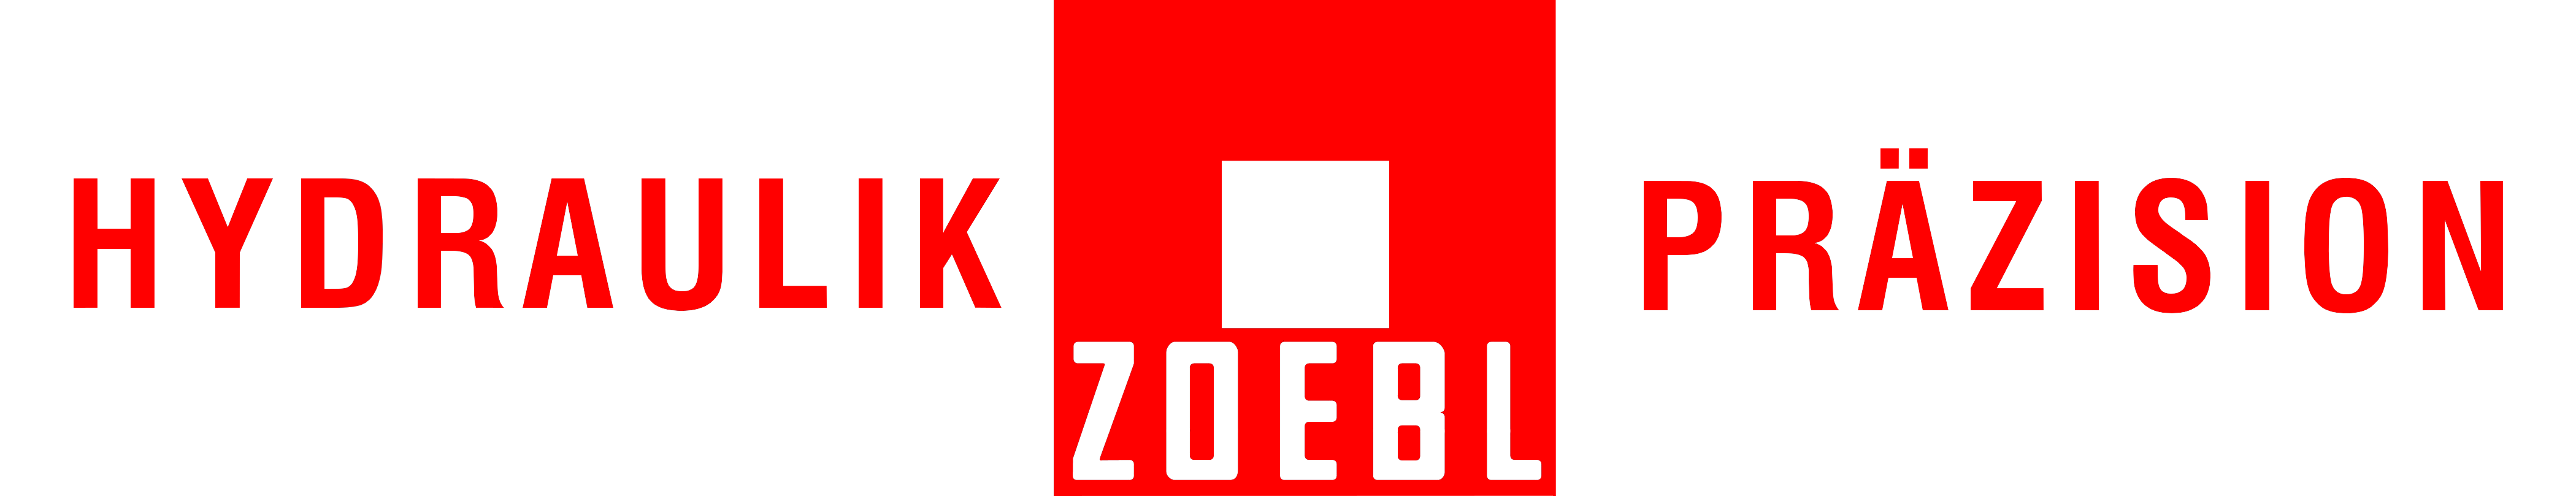 Zoebl logo